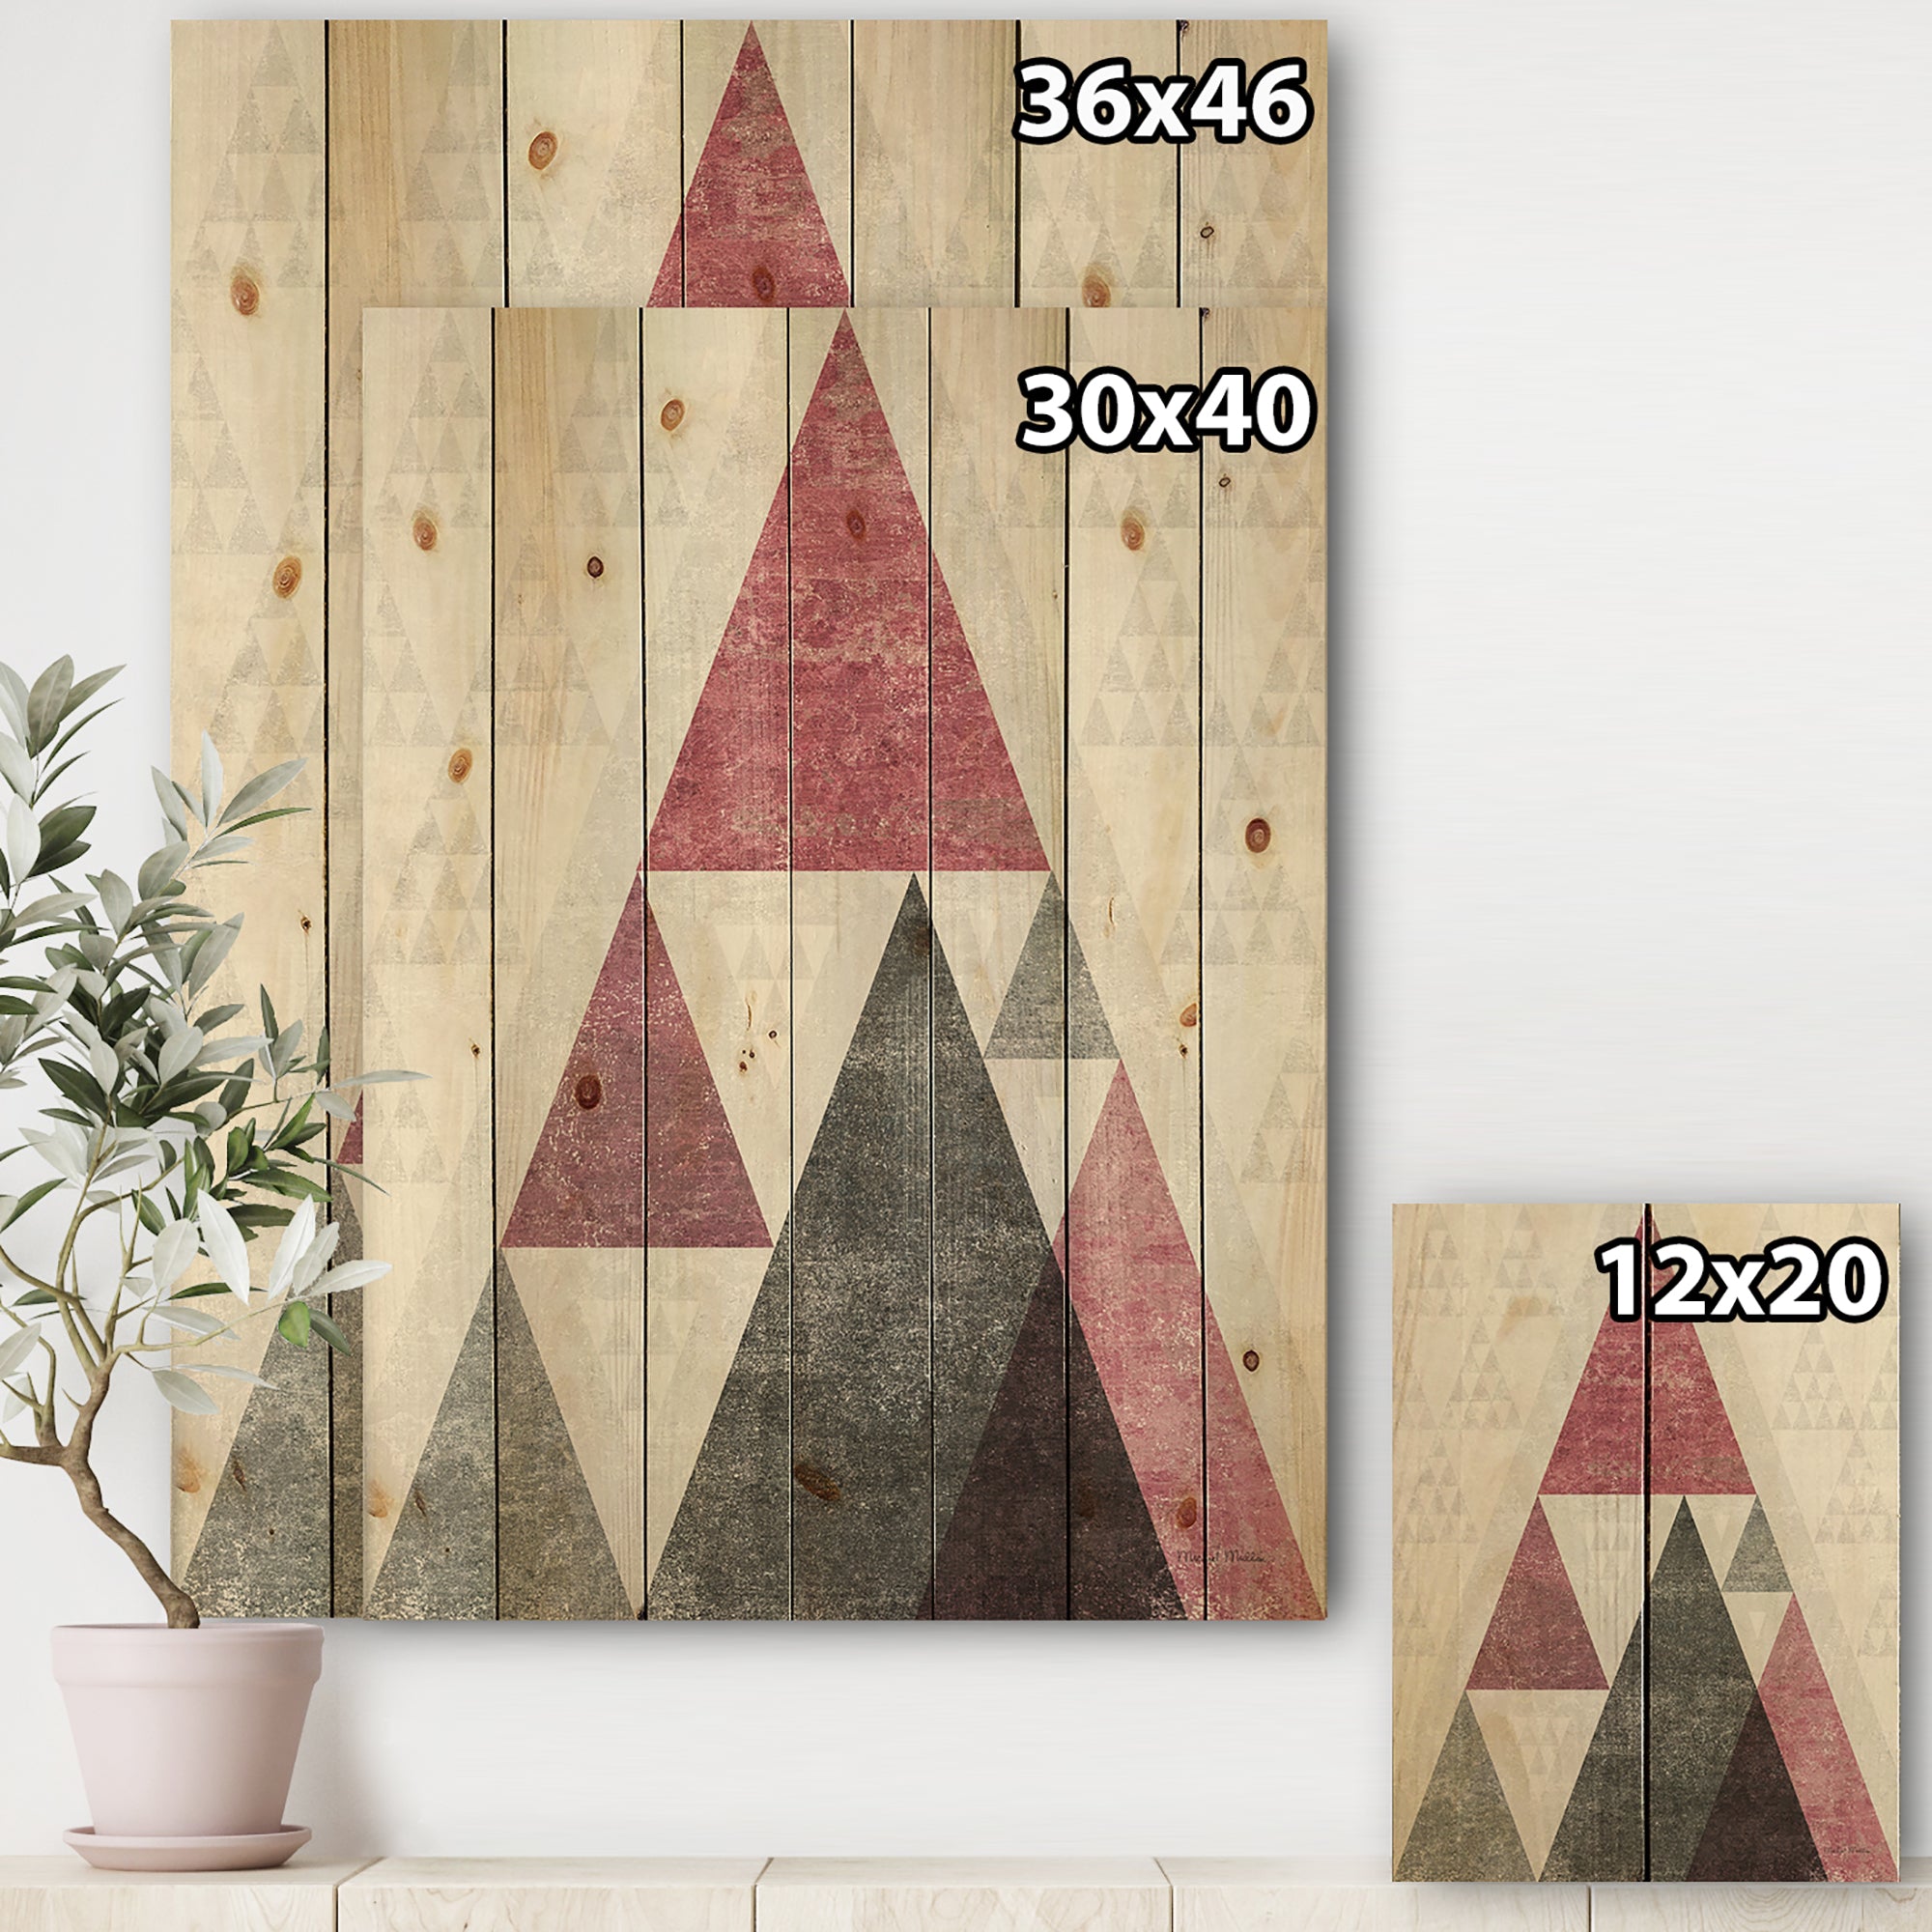 Pink Geometric Mod Triangles II - Mid-Century Transitional Modern Print on Natural Pine Wood - 15x20